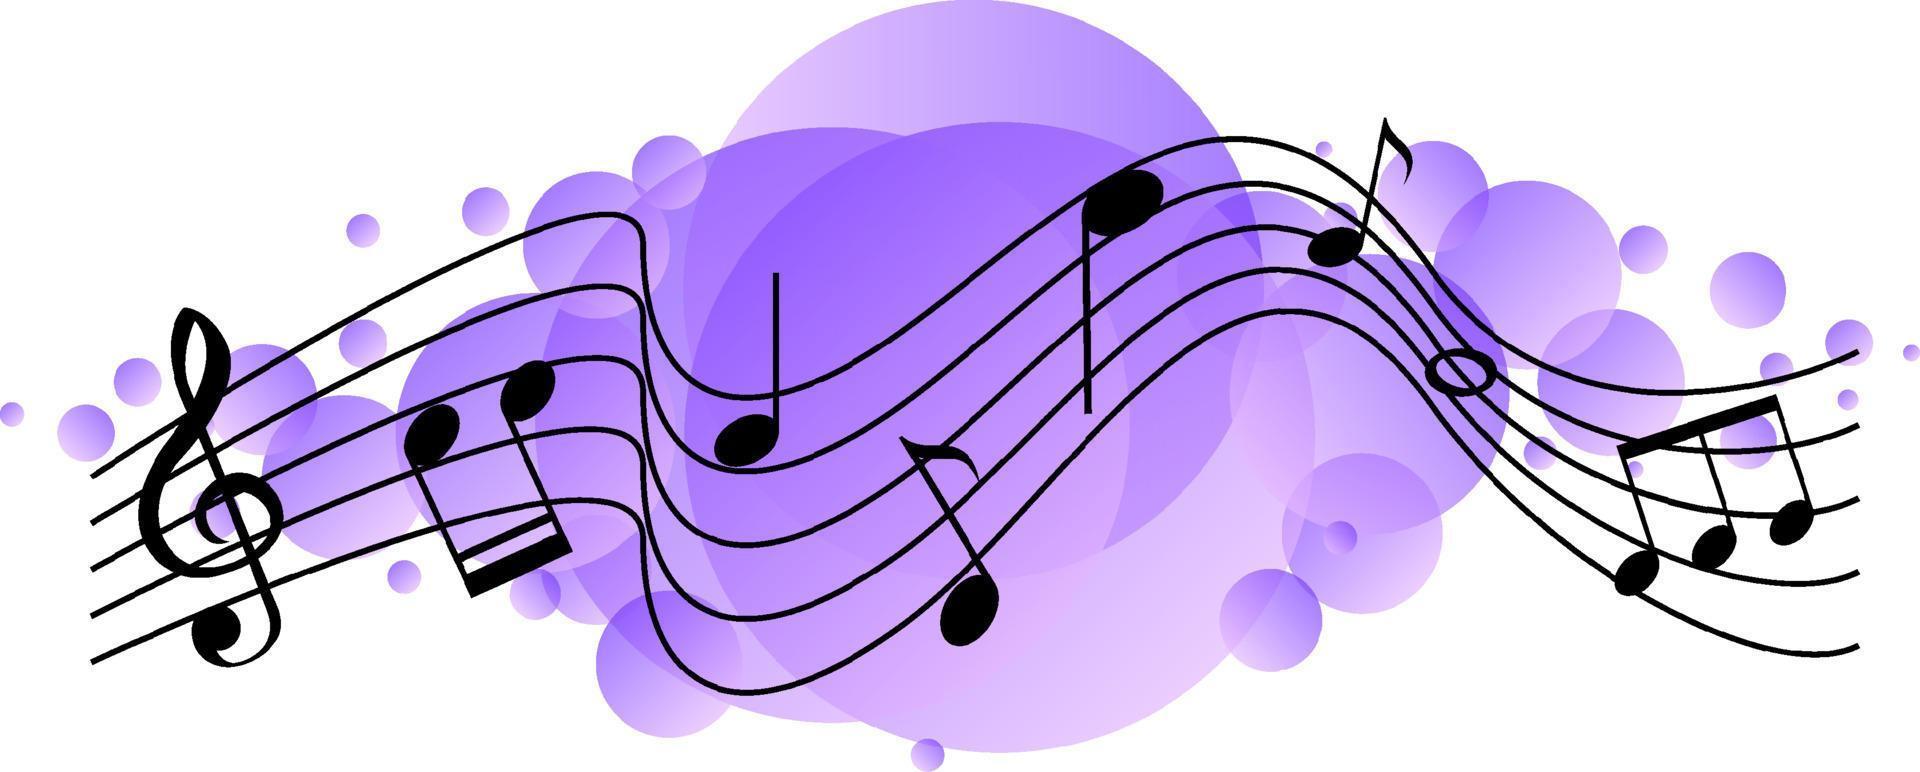 muzikale melodiesymbolen op paarse vlek vector